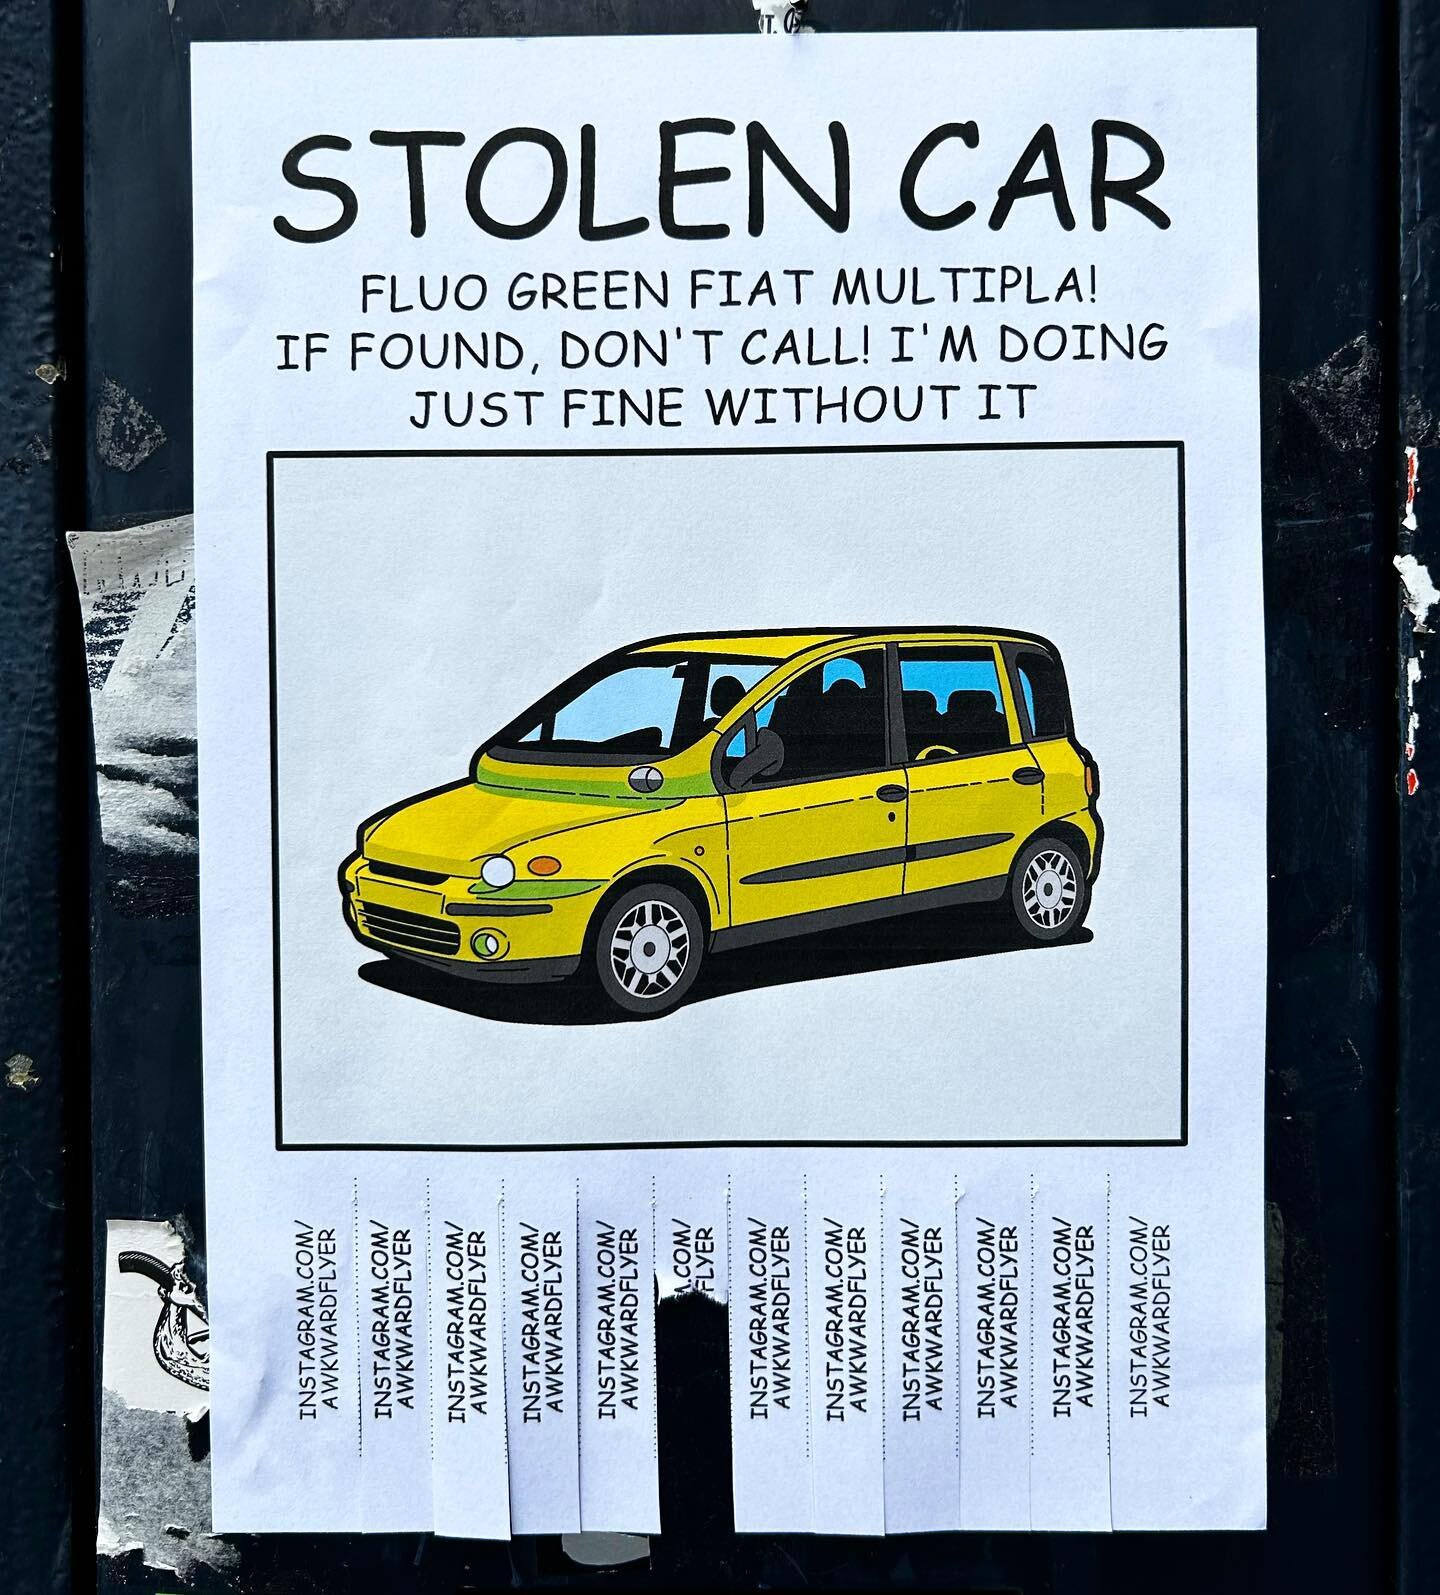 Stolen car...if you spot it, do NOT call....... #awkwardflyer #awkward #flyer #street #steetart #art #workshop #drawing #funny #haha #hilarious #joke #hahahaha #howto #diy #car #stolen #multipla #design